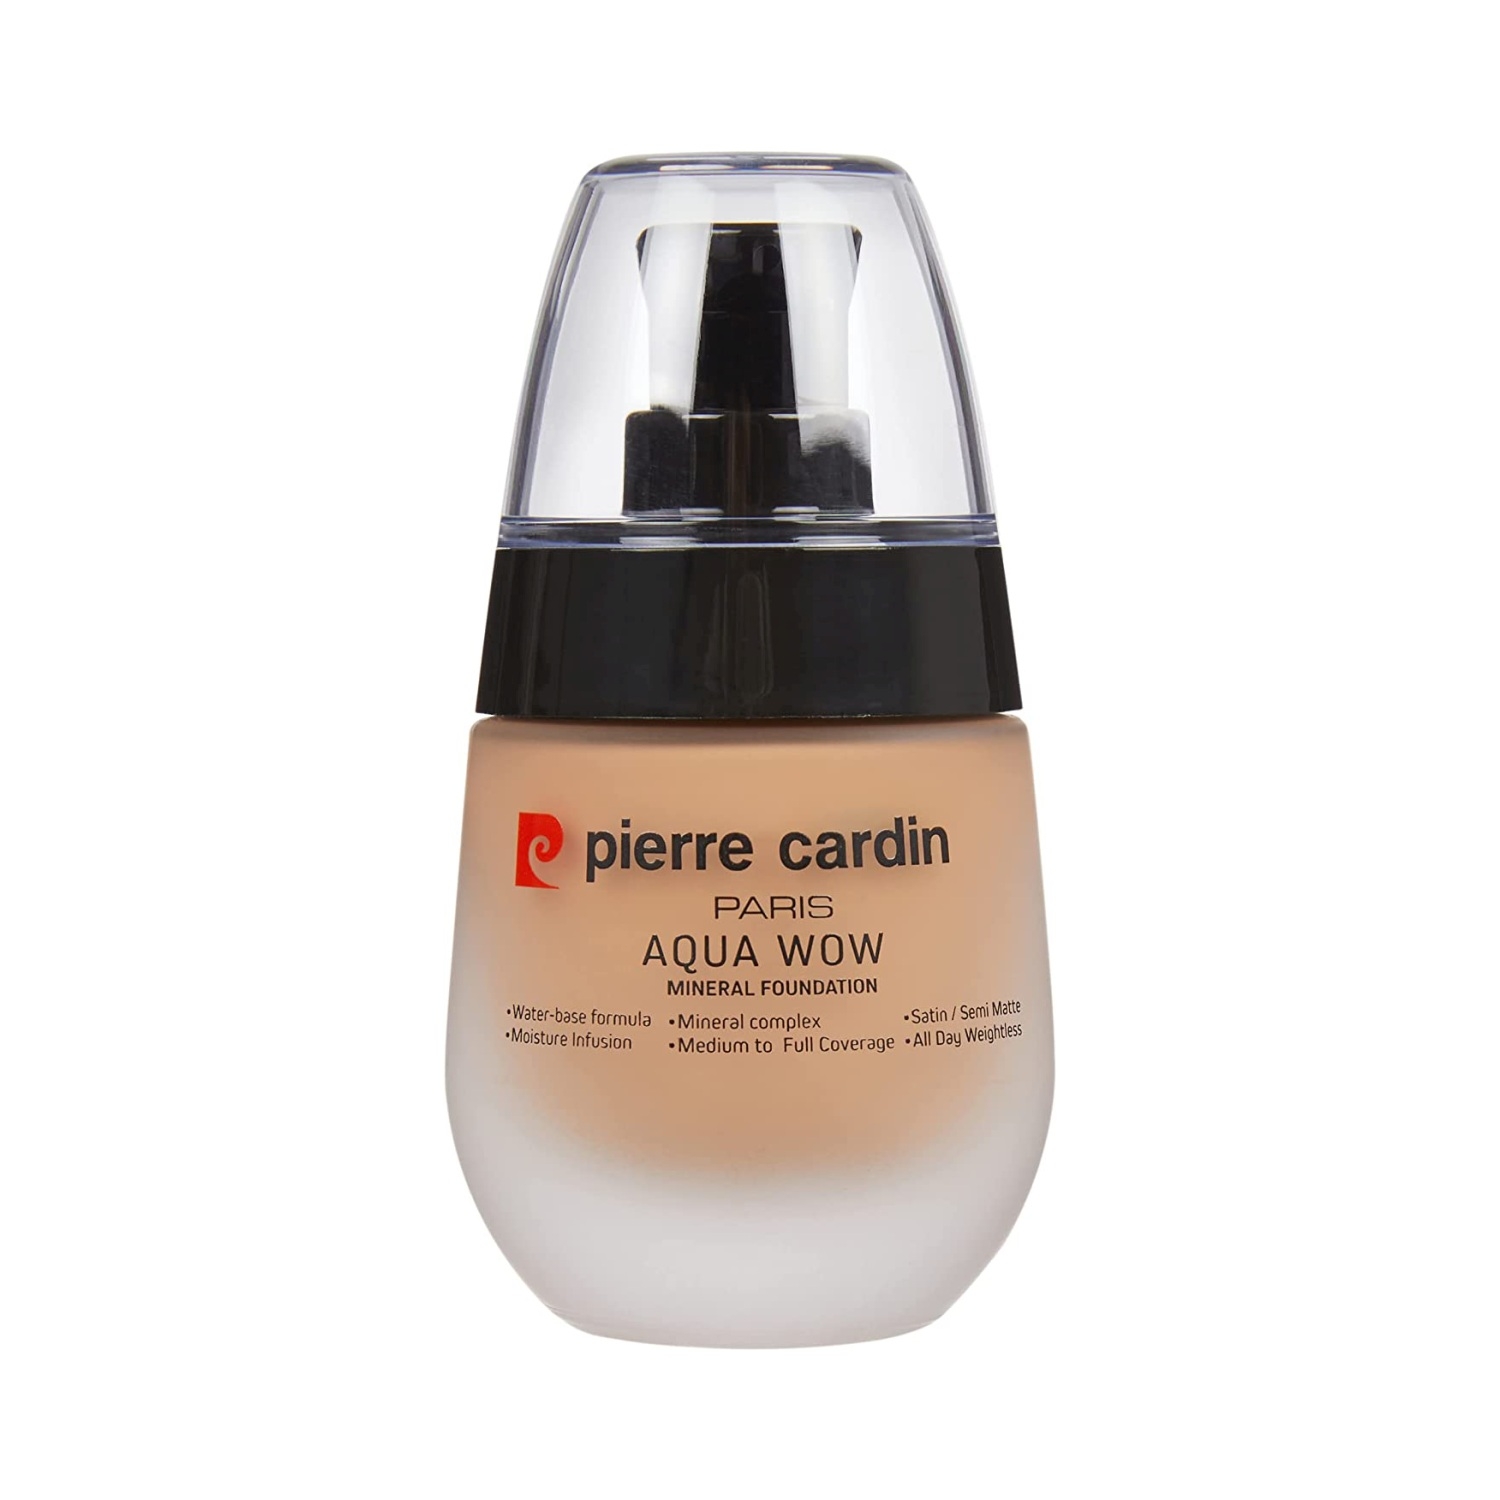 Pierre Cardin Paris | Pierre Cardin Paris Aqua Wow Mineral Foundation - 901 Rose Skin With Neutral Beige (30ml)